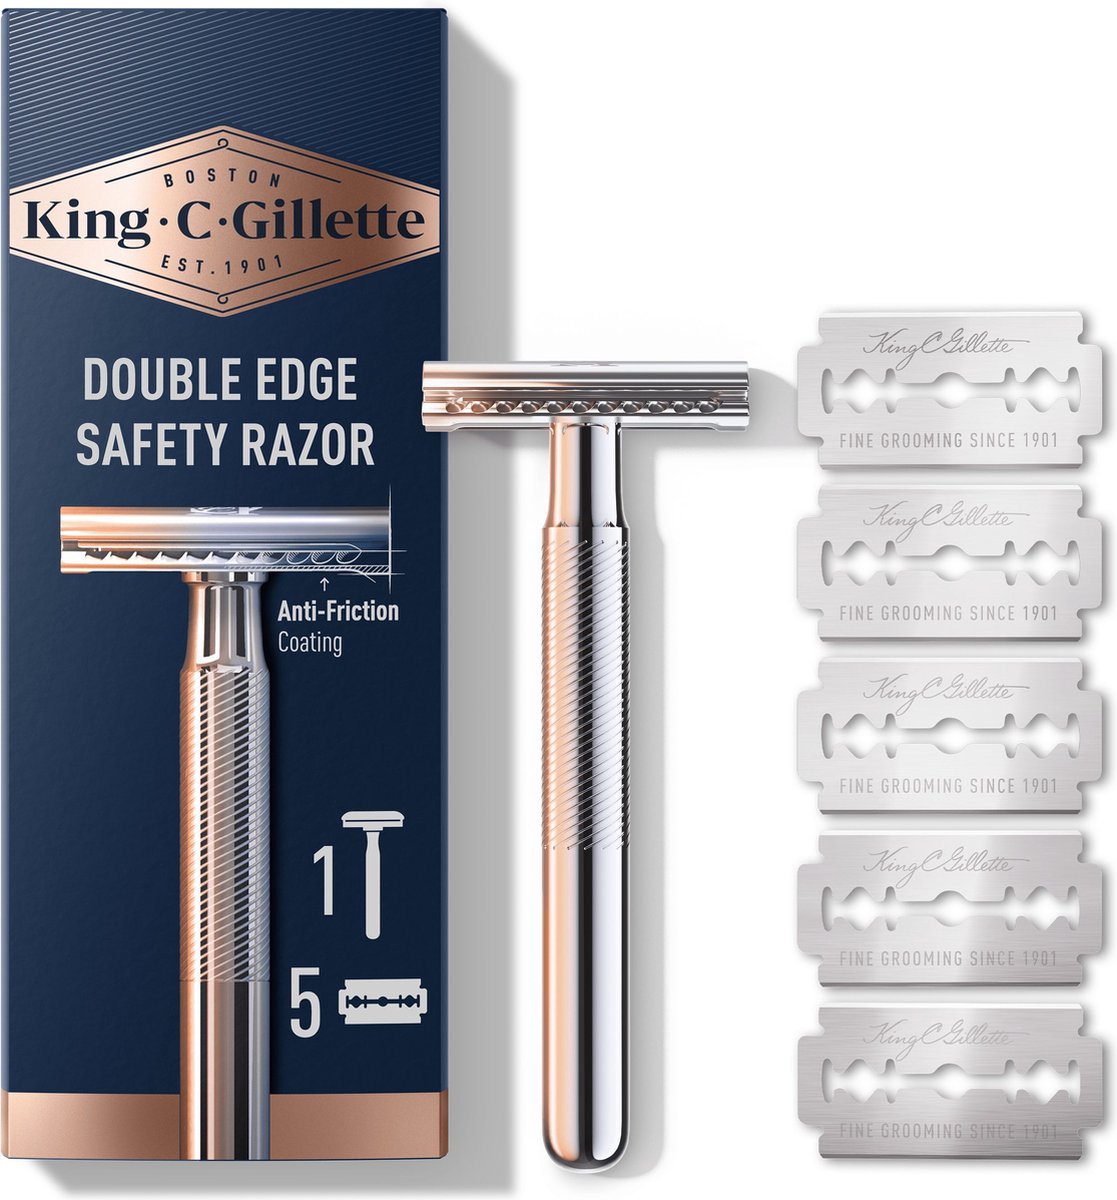 King C. Gillette Double Edge Safety Razor - 5 Navulmesjes - King C. Gillette